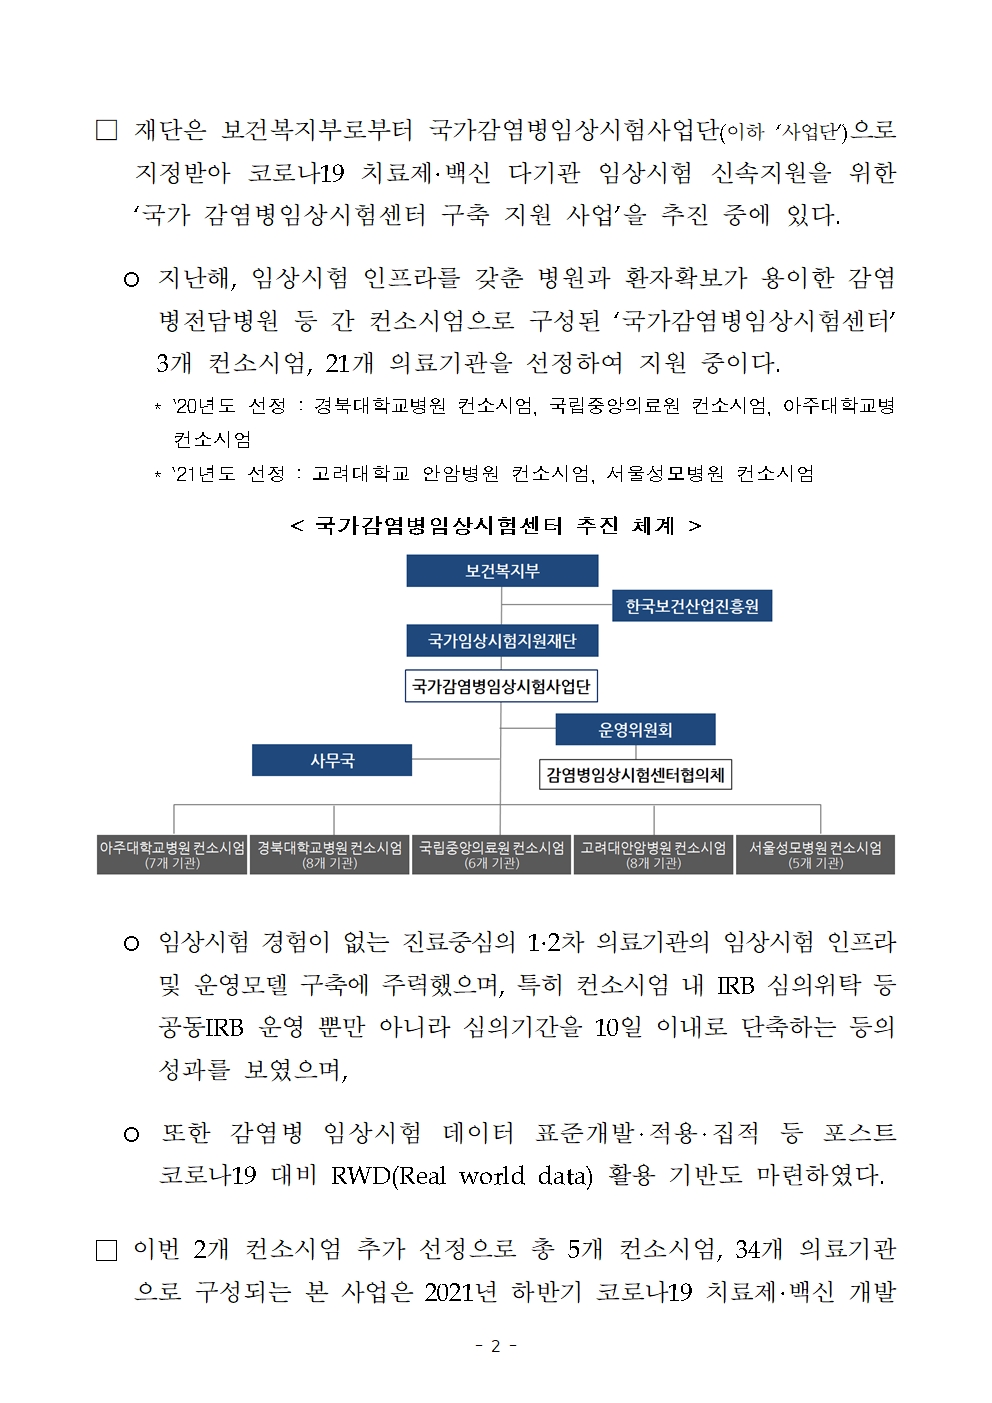 Konect 국가임상시험지원재단